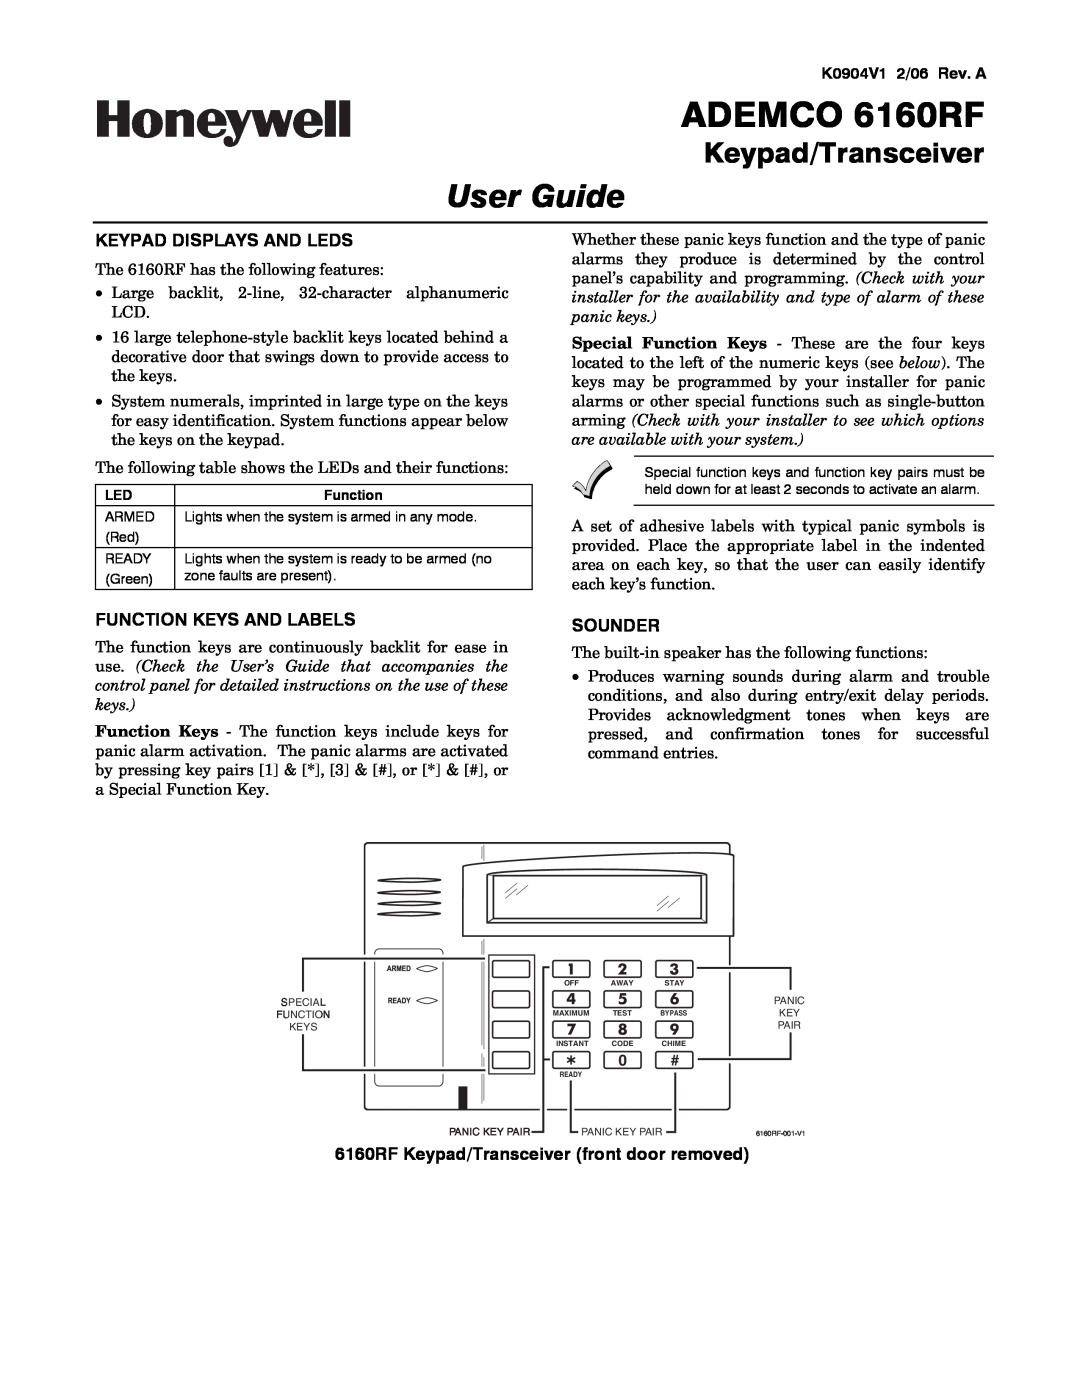 Honeywell manual Keypad Displays And Leds, Function Keys And Labels, Sounder, K0904V1 2/06 Rev. A, ADEMCO 6160RF 